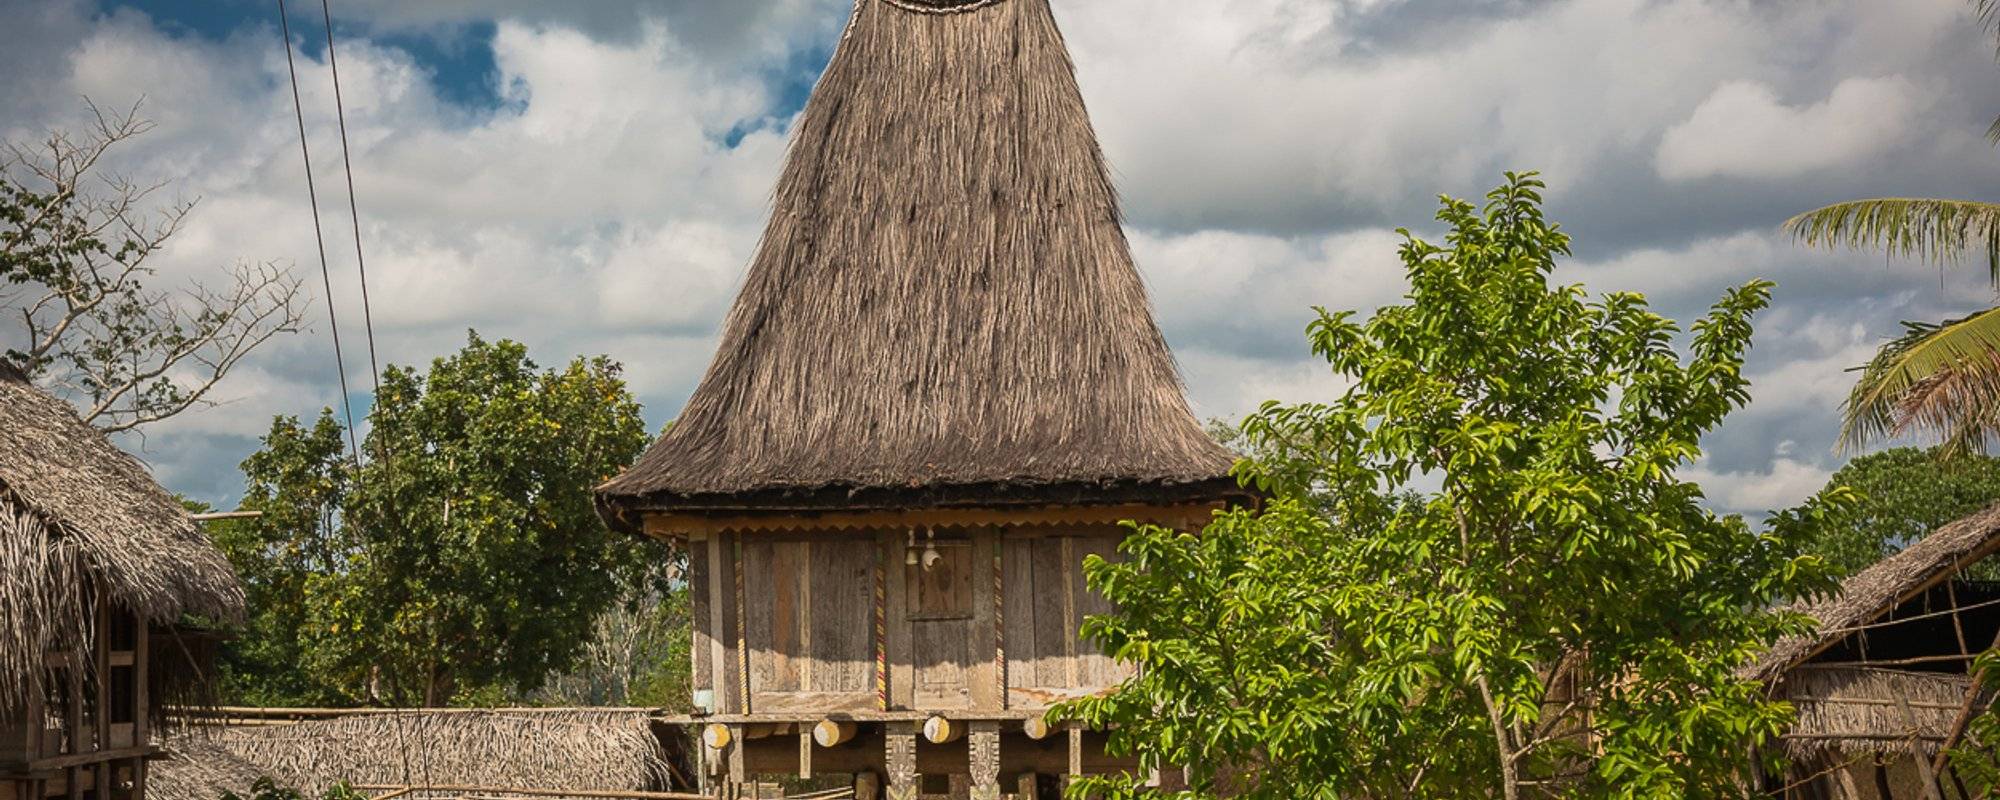 #BeautifulSunday and #SublimeSunday :) - The Sacred houses of East Timor